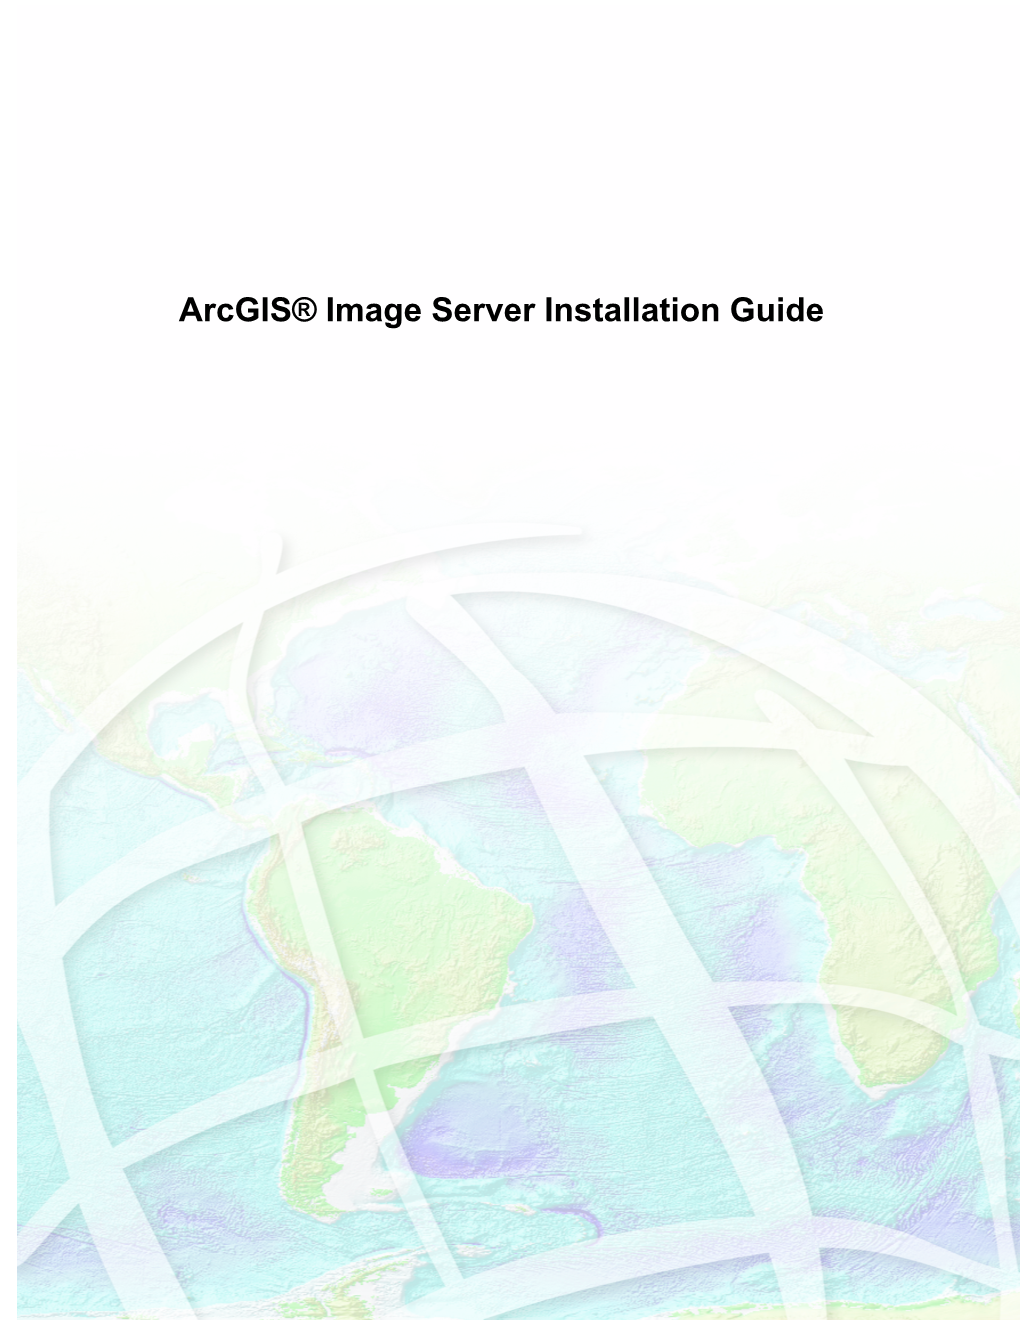 Arcgis® Image Server Installation Guide Copyright © 2006, 2007, 2008 Zanja Technologies, Inc